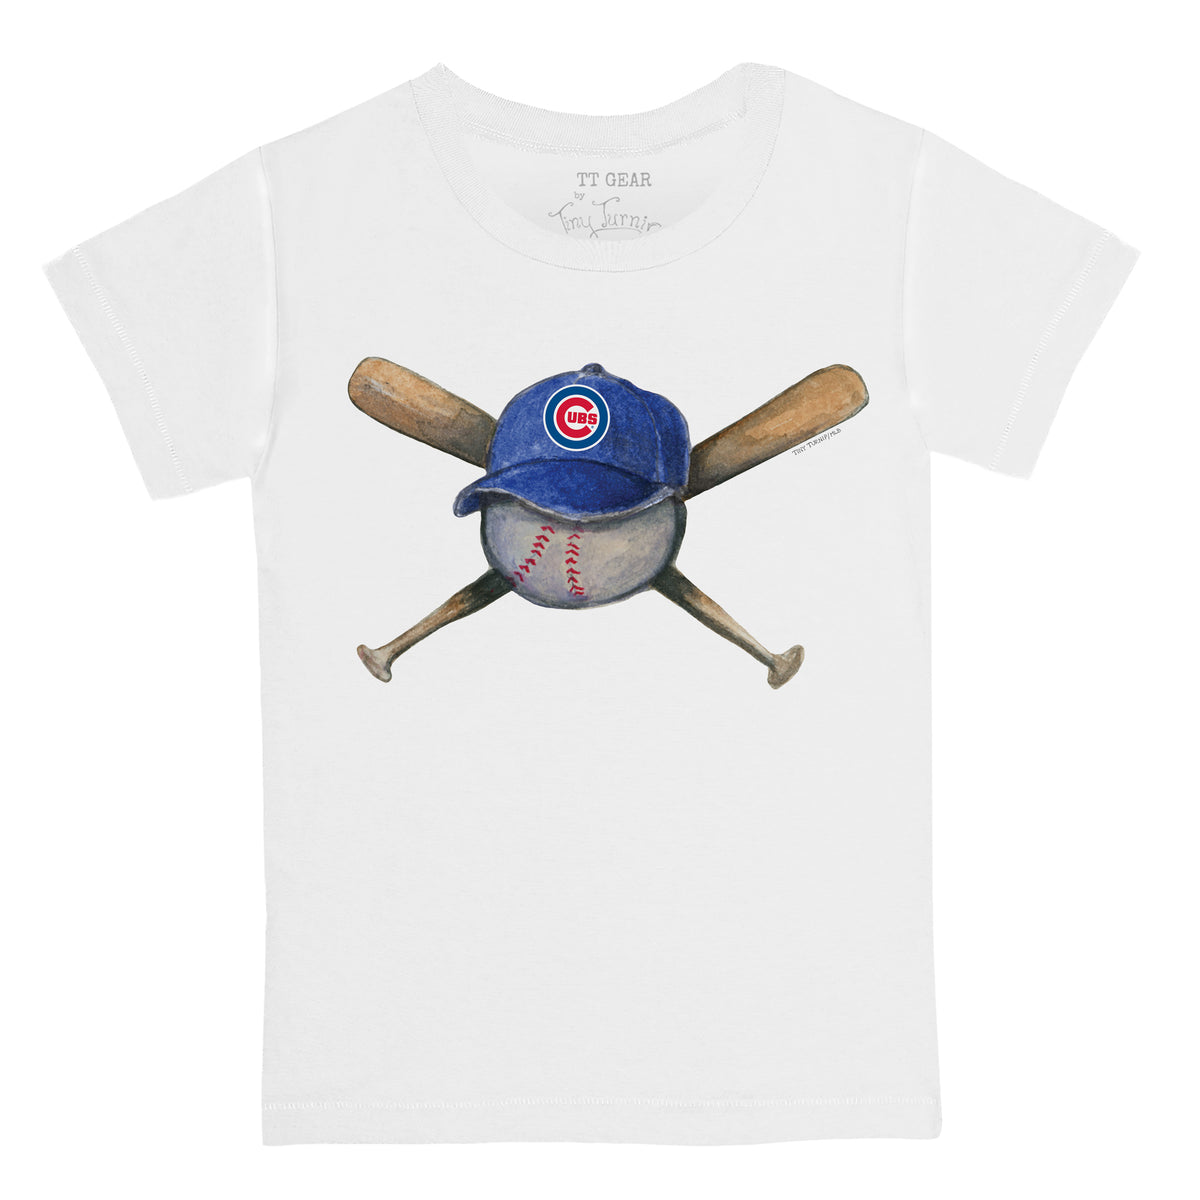 Lids Chicago Cubs Tiny Turnip Girls Youth Stitched Baseball Fringe T-Shirt  - Royal